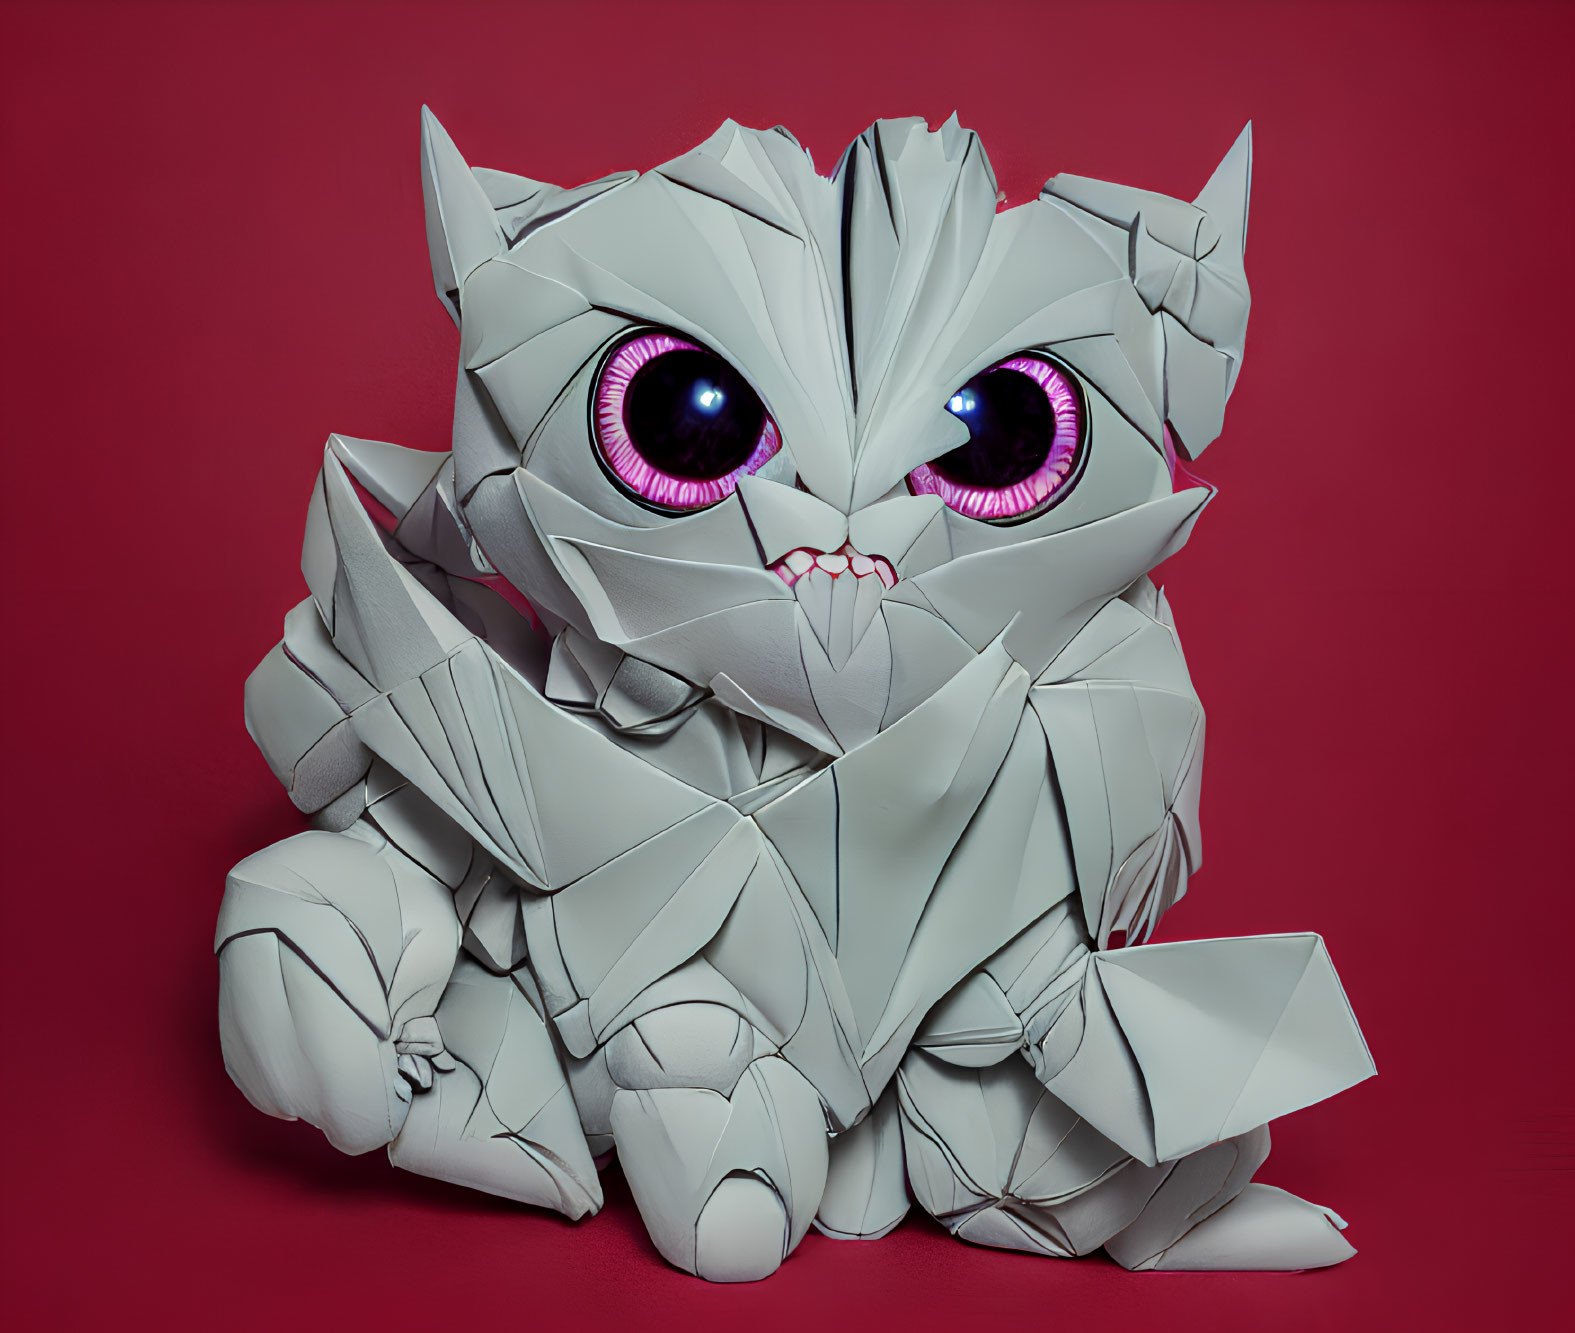 Stylized 3D Digital Artwork: Origami Owl with Purple Glowing Eyes